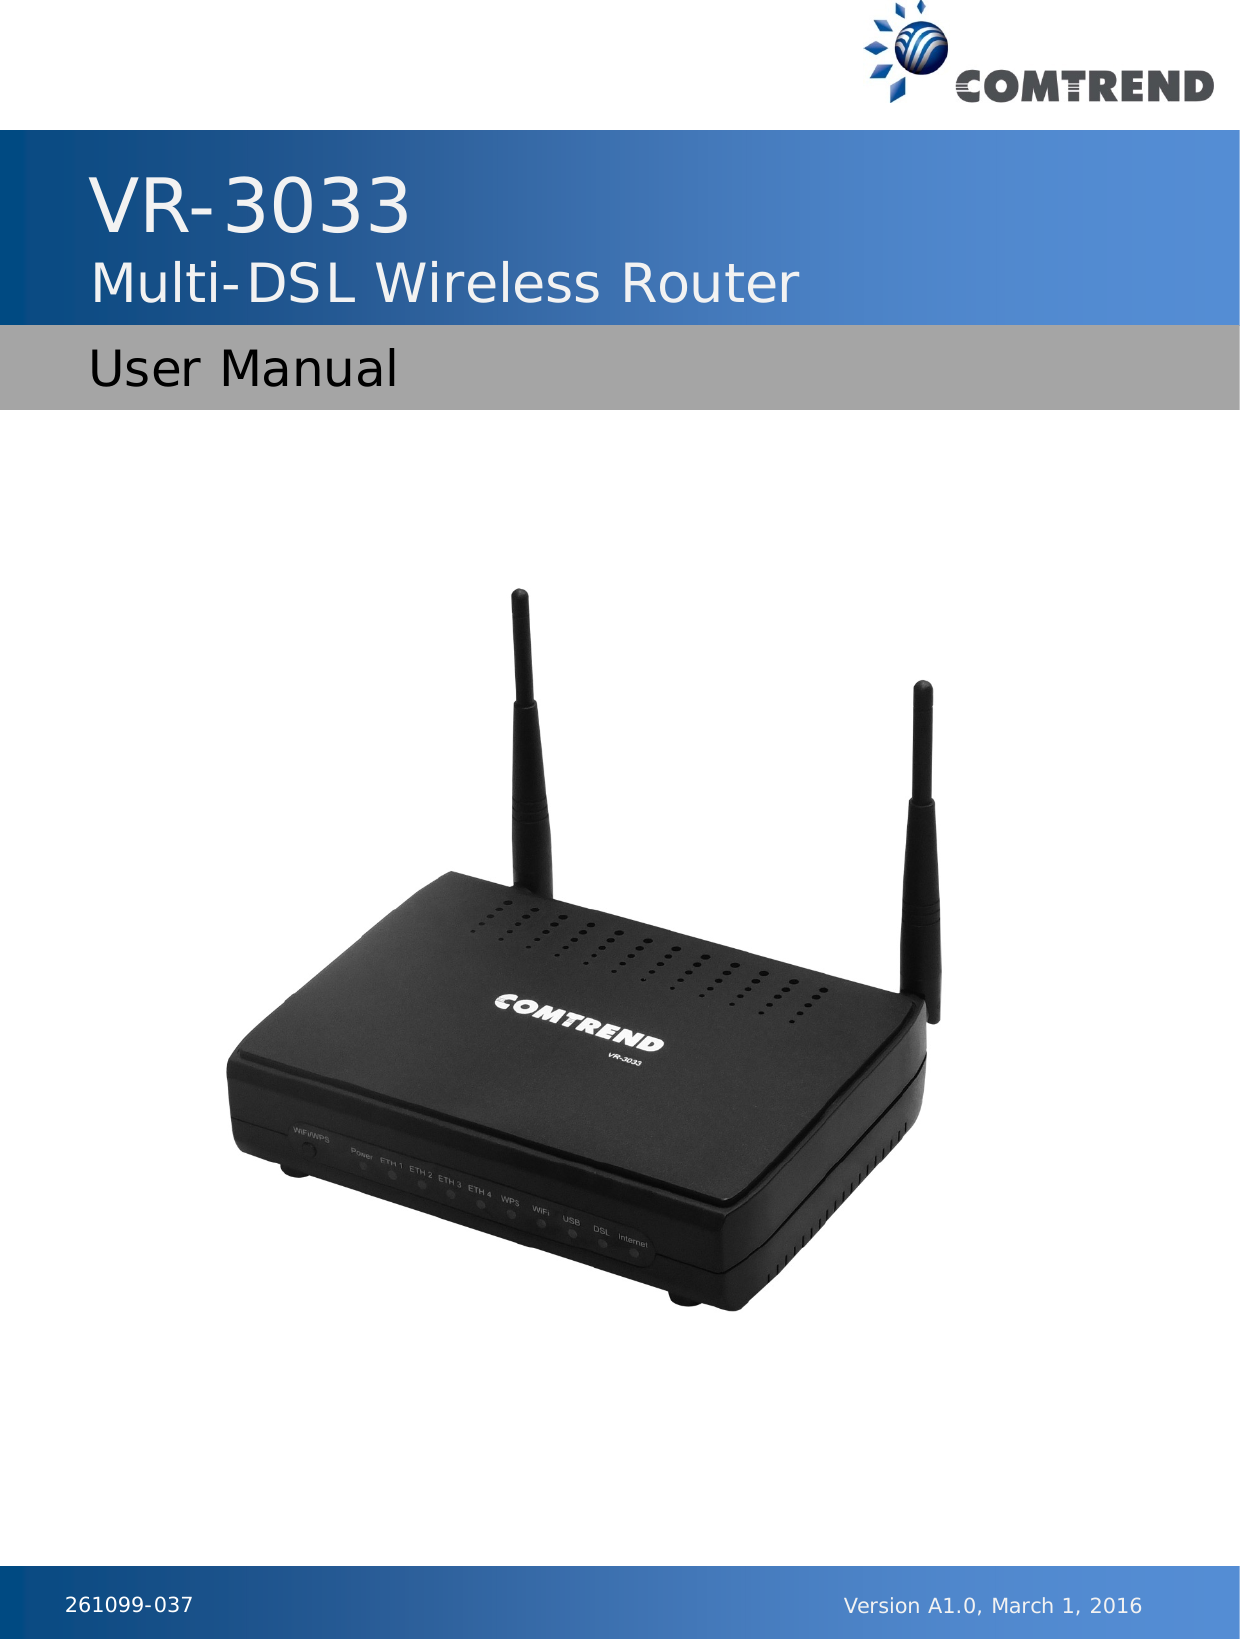   261099-037                  VR-3033 Multi-DSL Wireless Router User Manual Version A1.0, March 1, 2016 